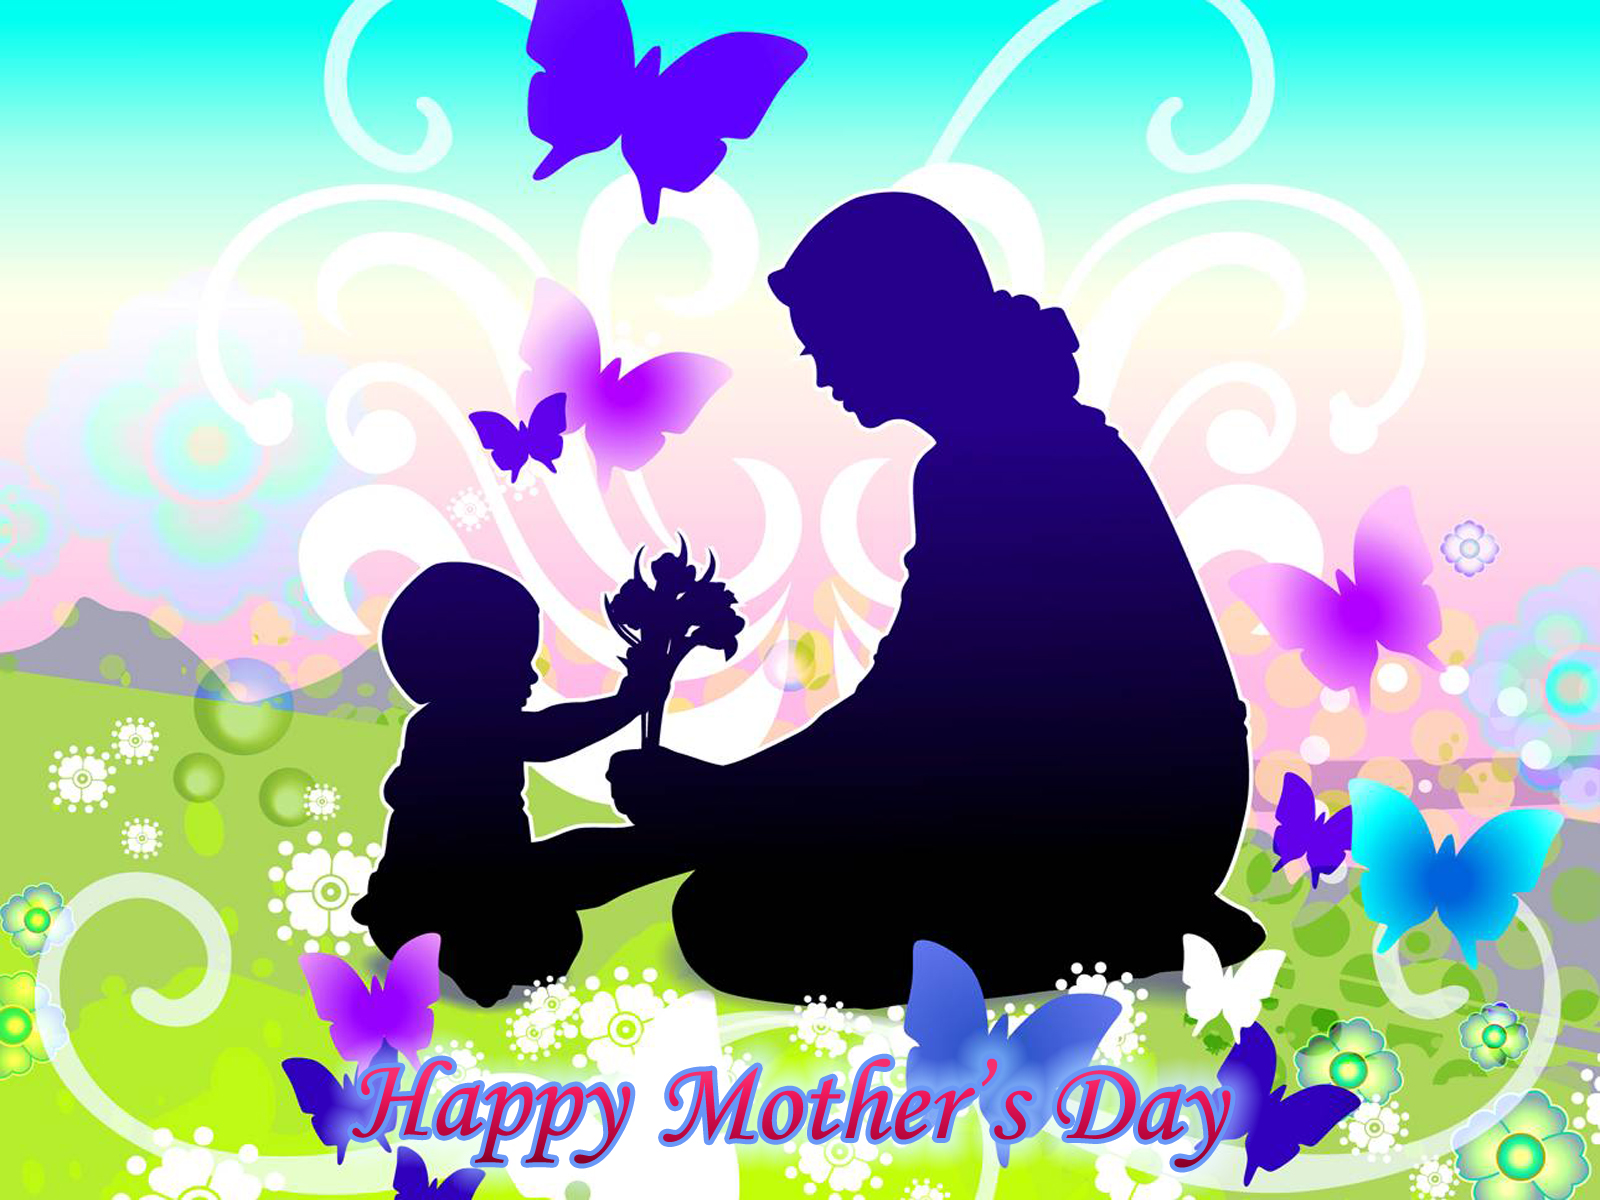 Happy Mothers Day Puter Desktop Wallpaper Pictures Image